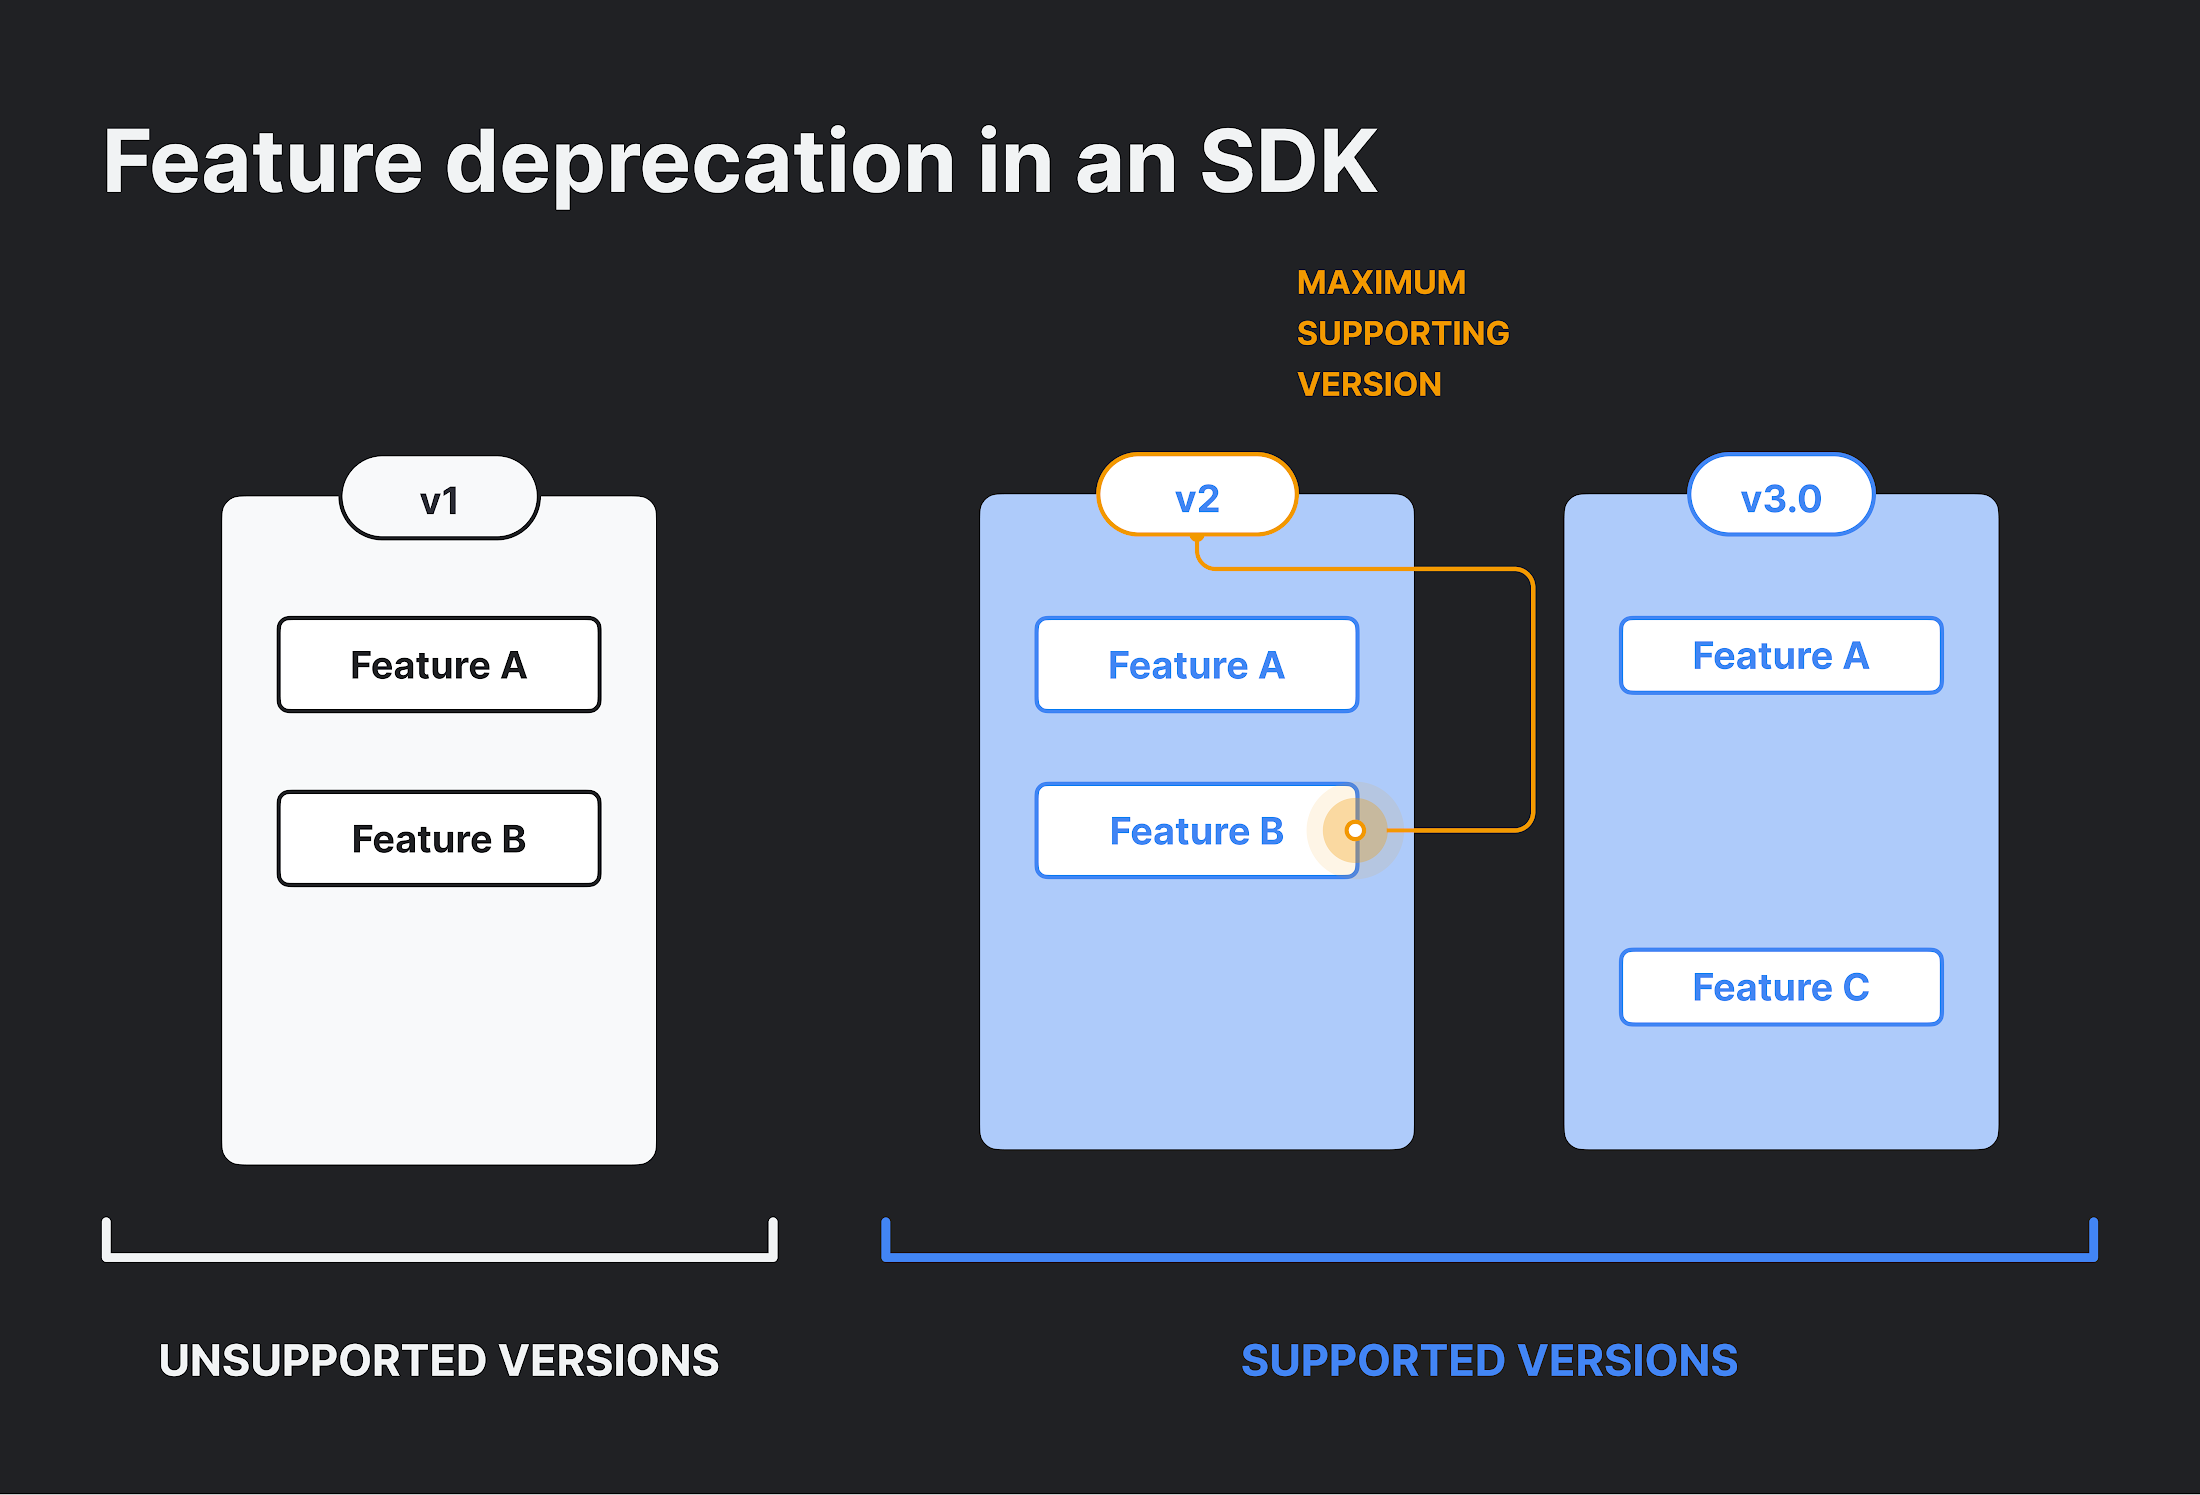 SDK Feature Deprecation